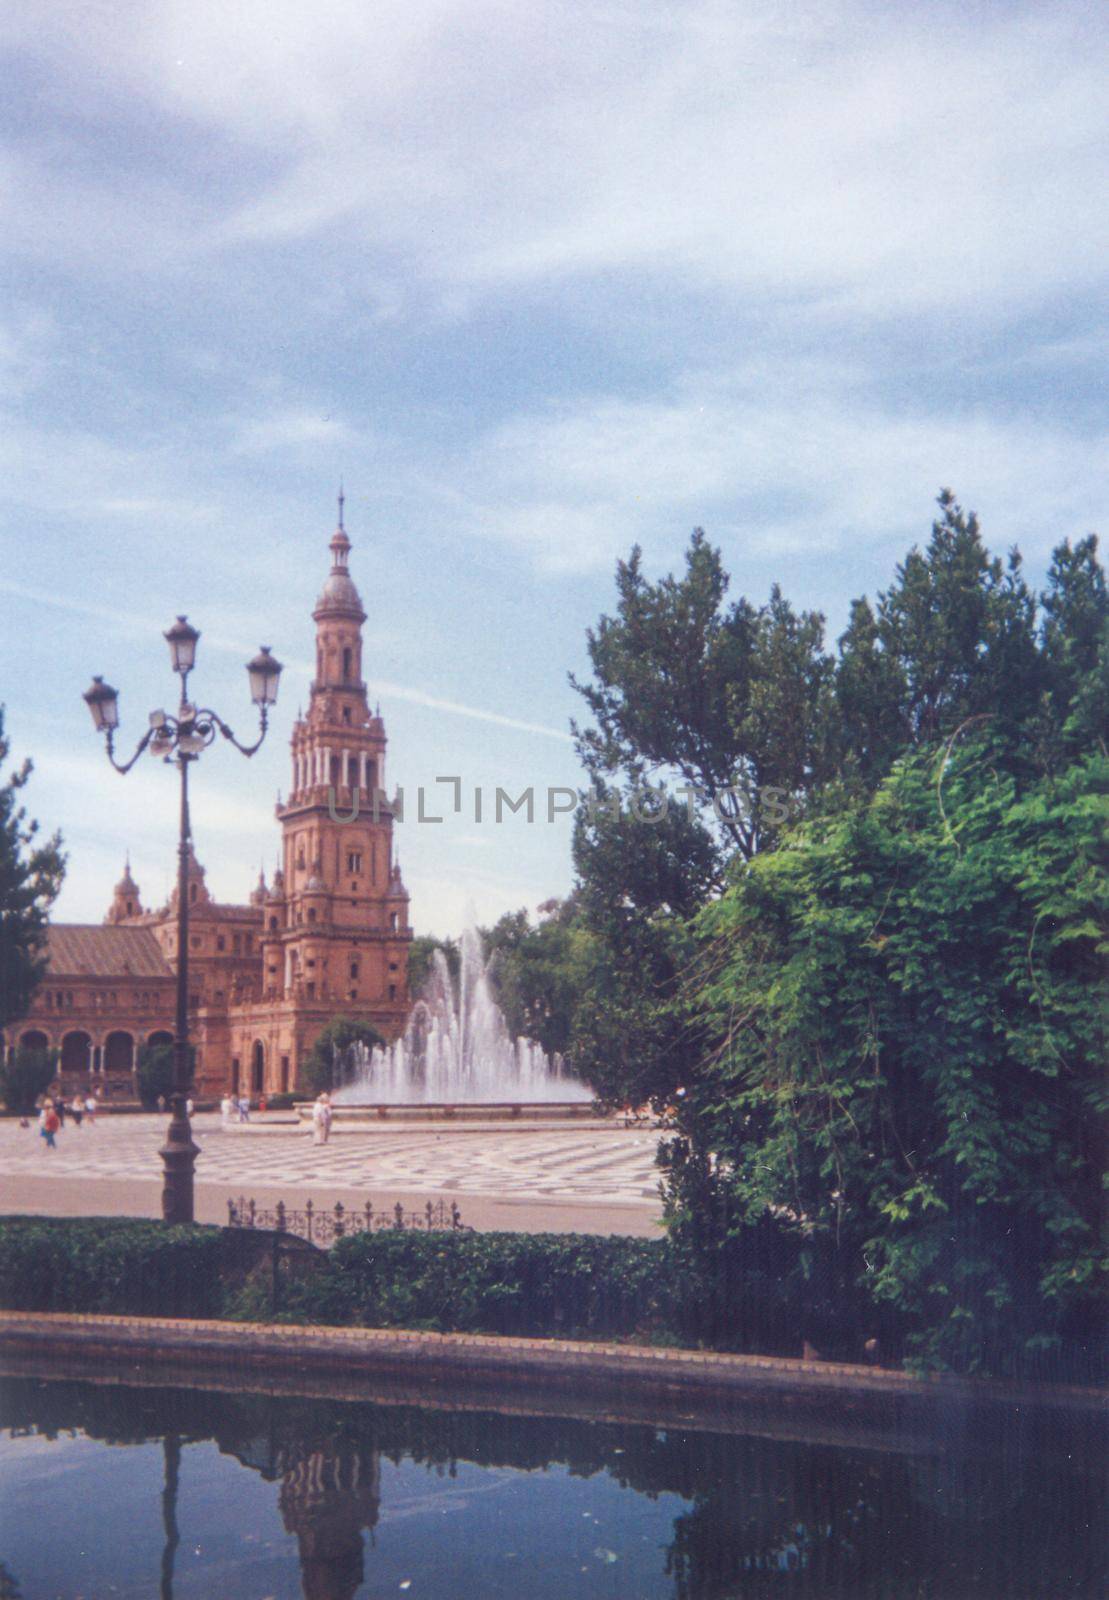 Spain 1989, Plaza de España in Seville by pippocarlot